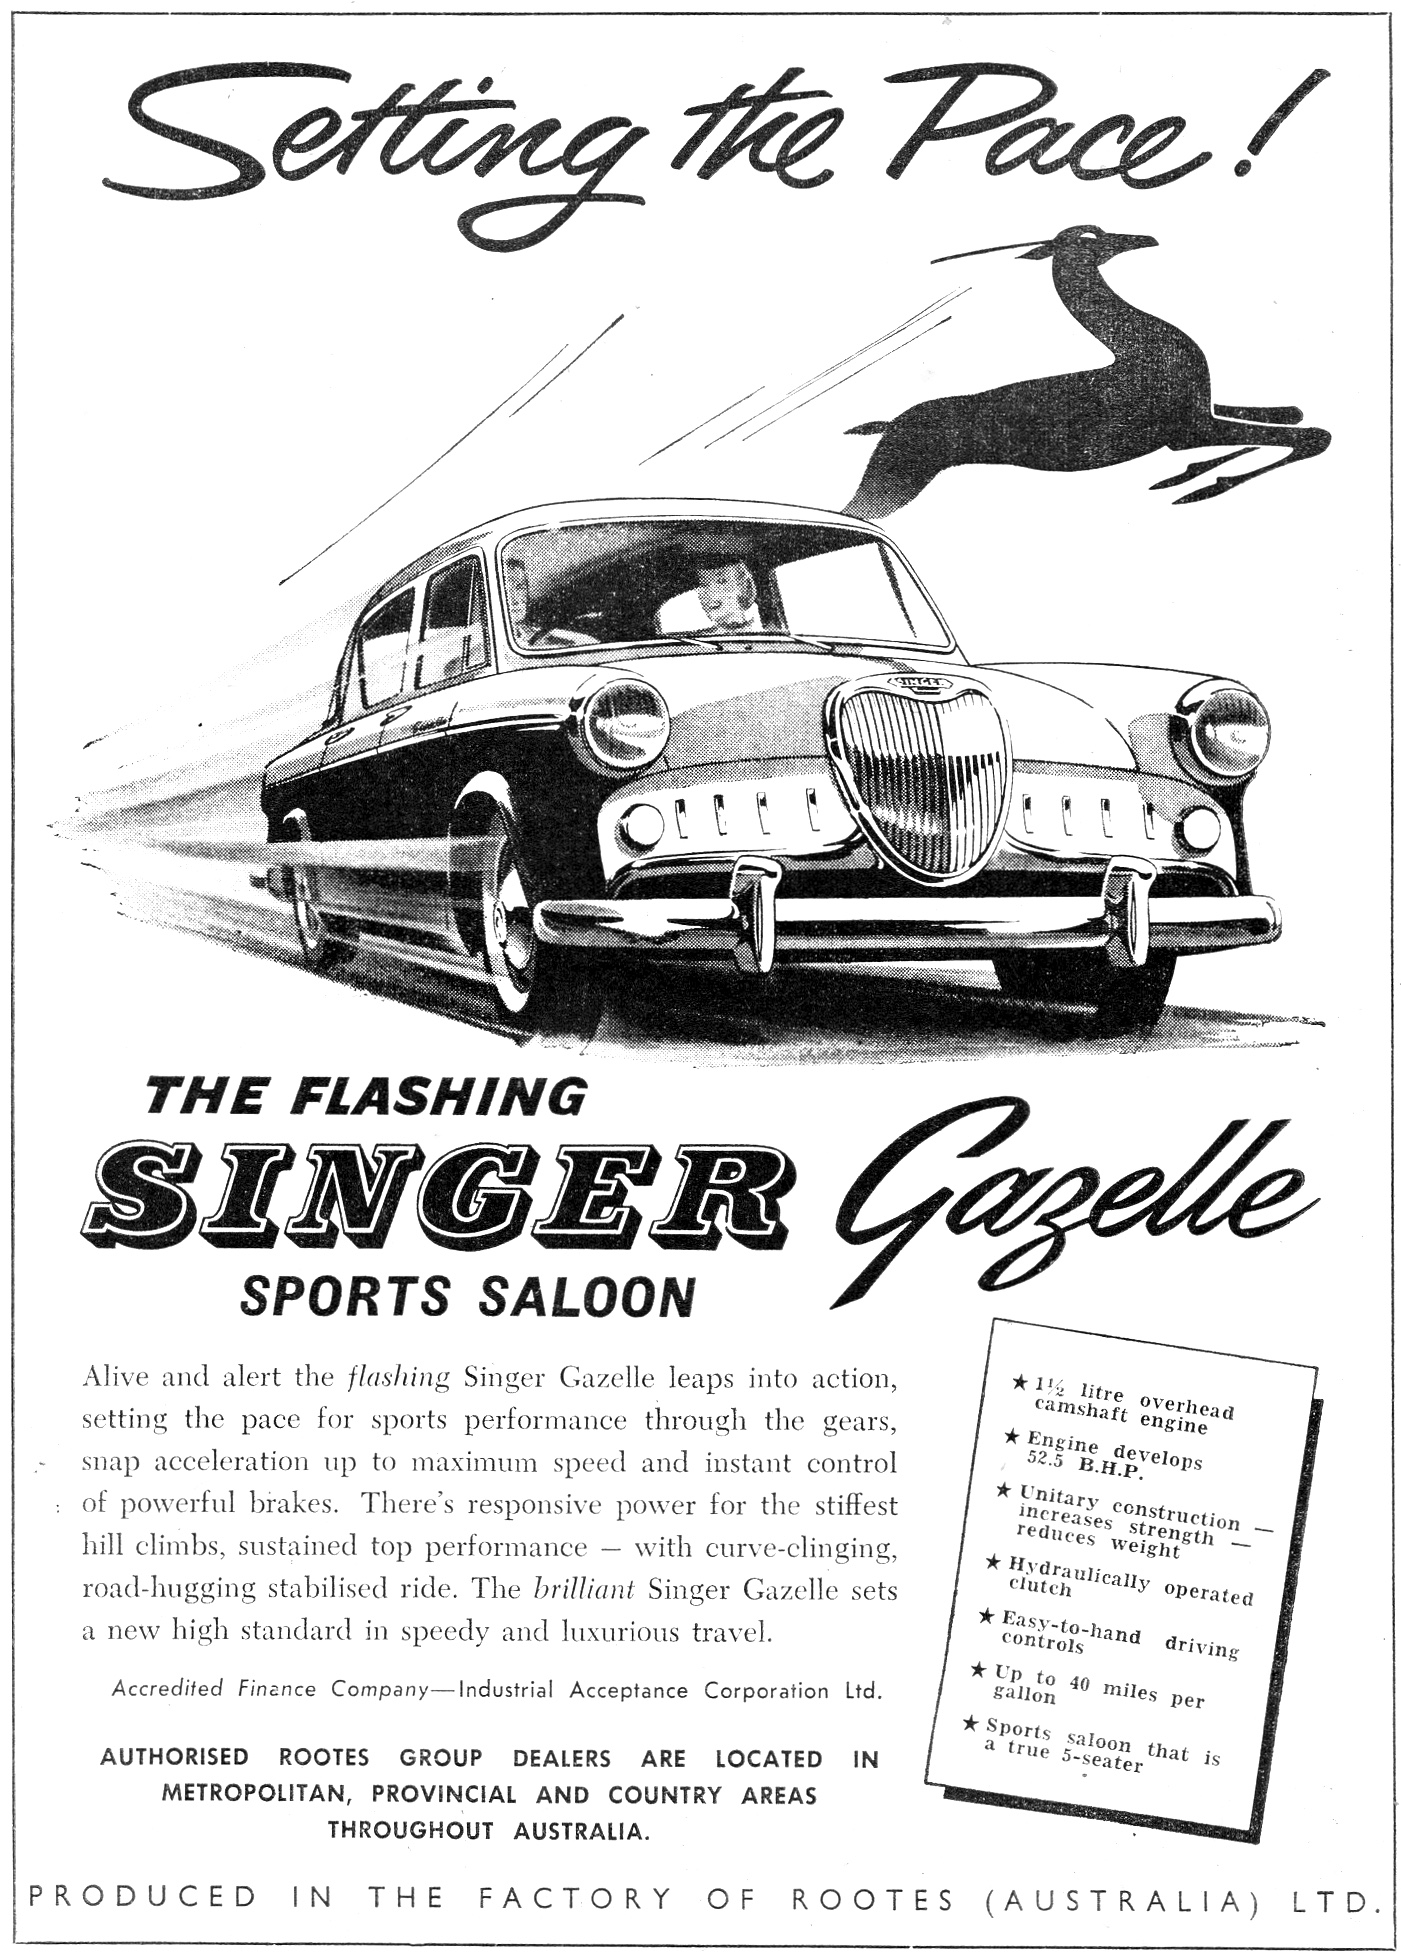 1958 Singer Gazelle Sports Sedan Rootes Group